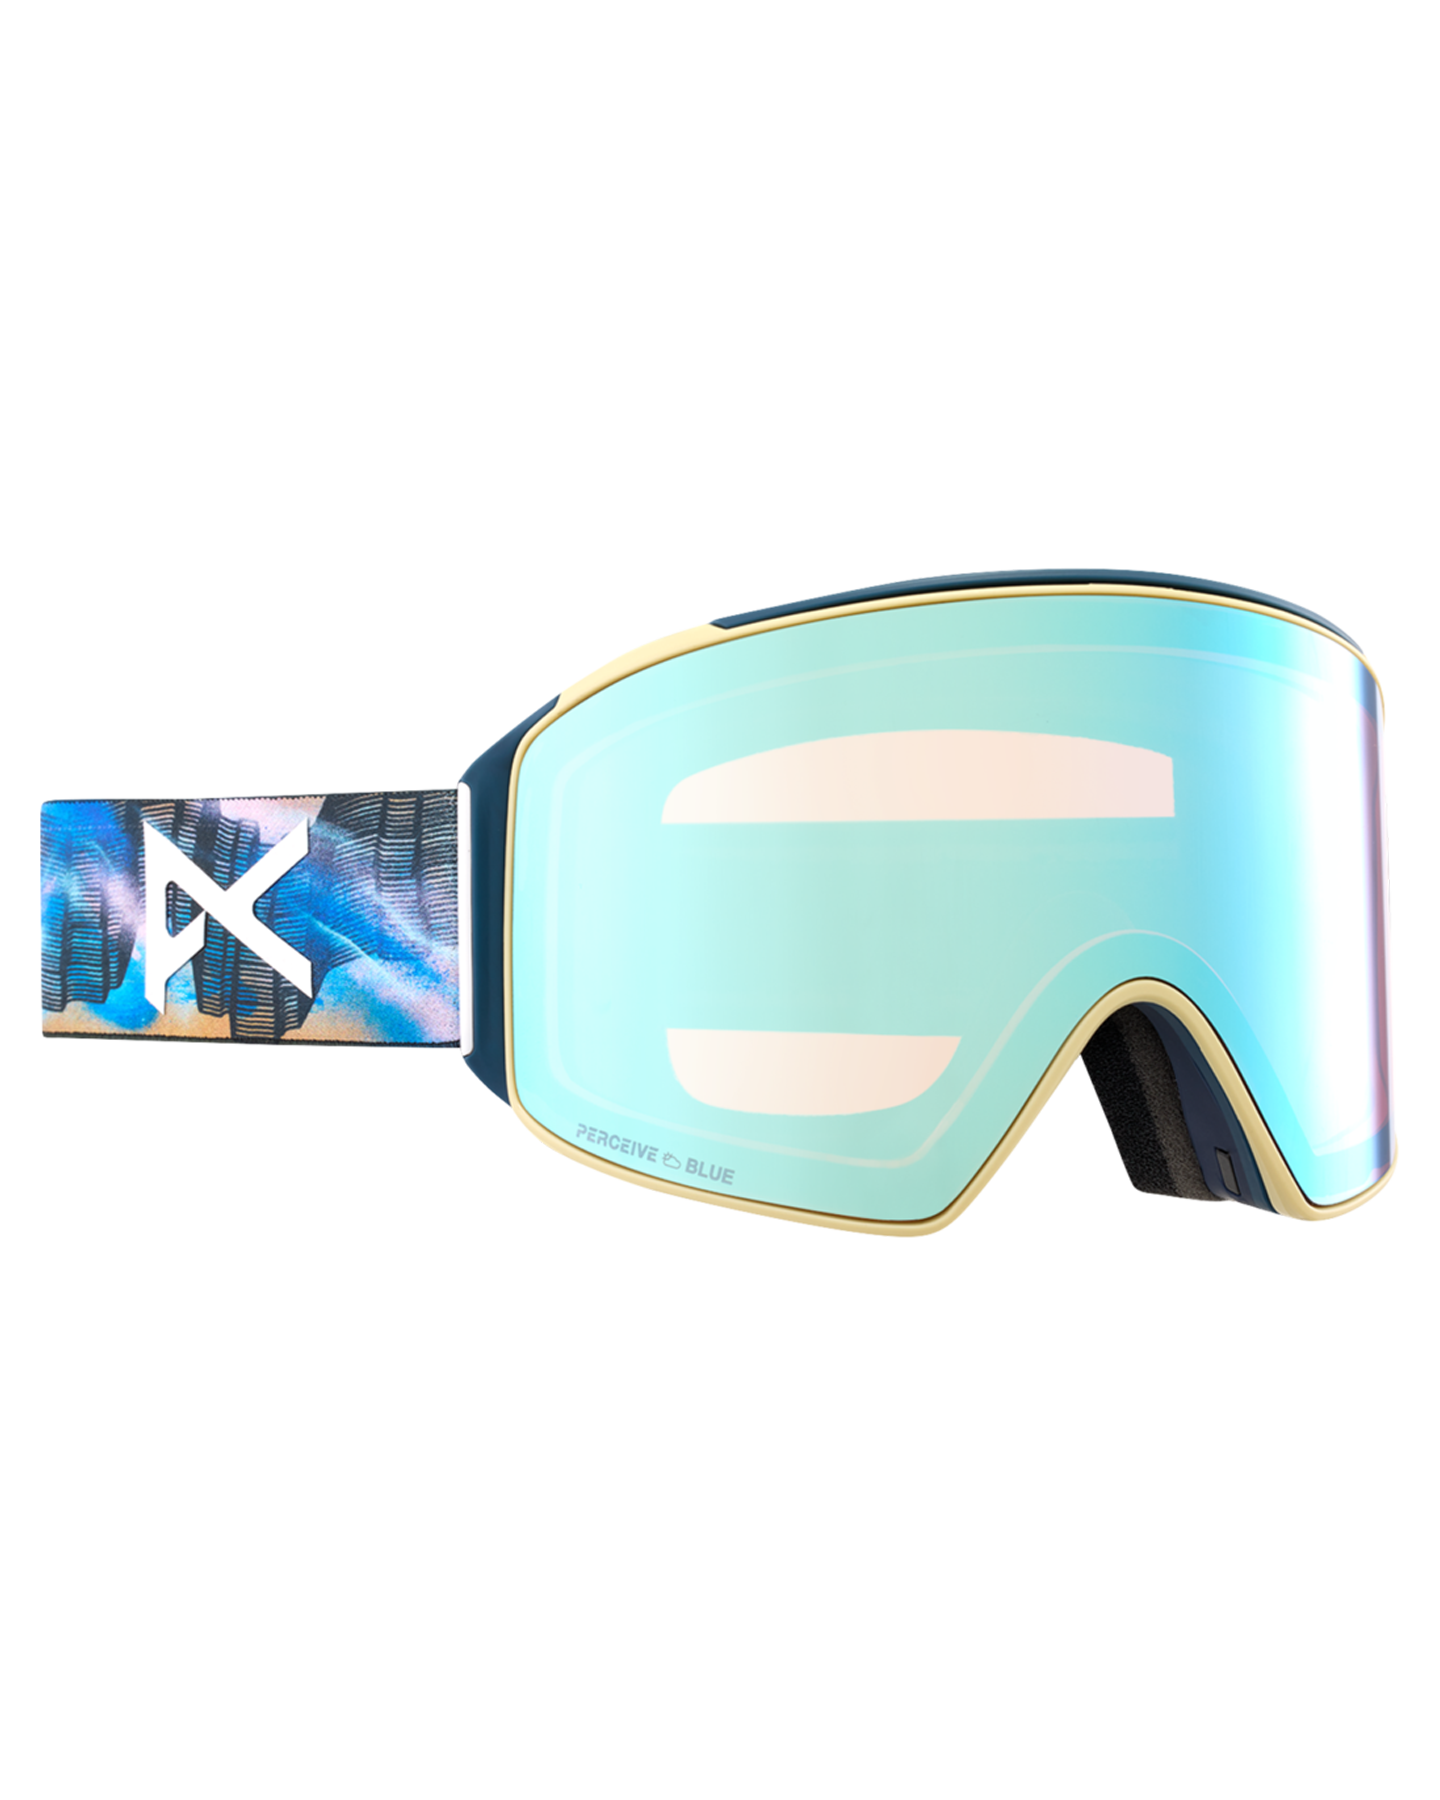 Anon M4 Cylindrical Snow Goggles + Bonus Lens + MFI - Chet Malinow / Perceive Variable Blue Men's Snow Goggles - SnowSkiersWarehouse